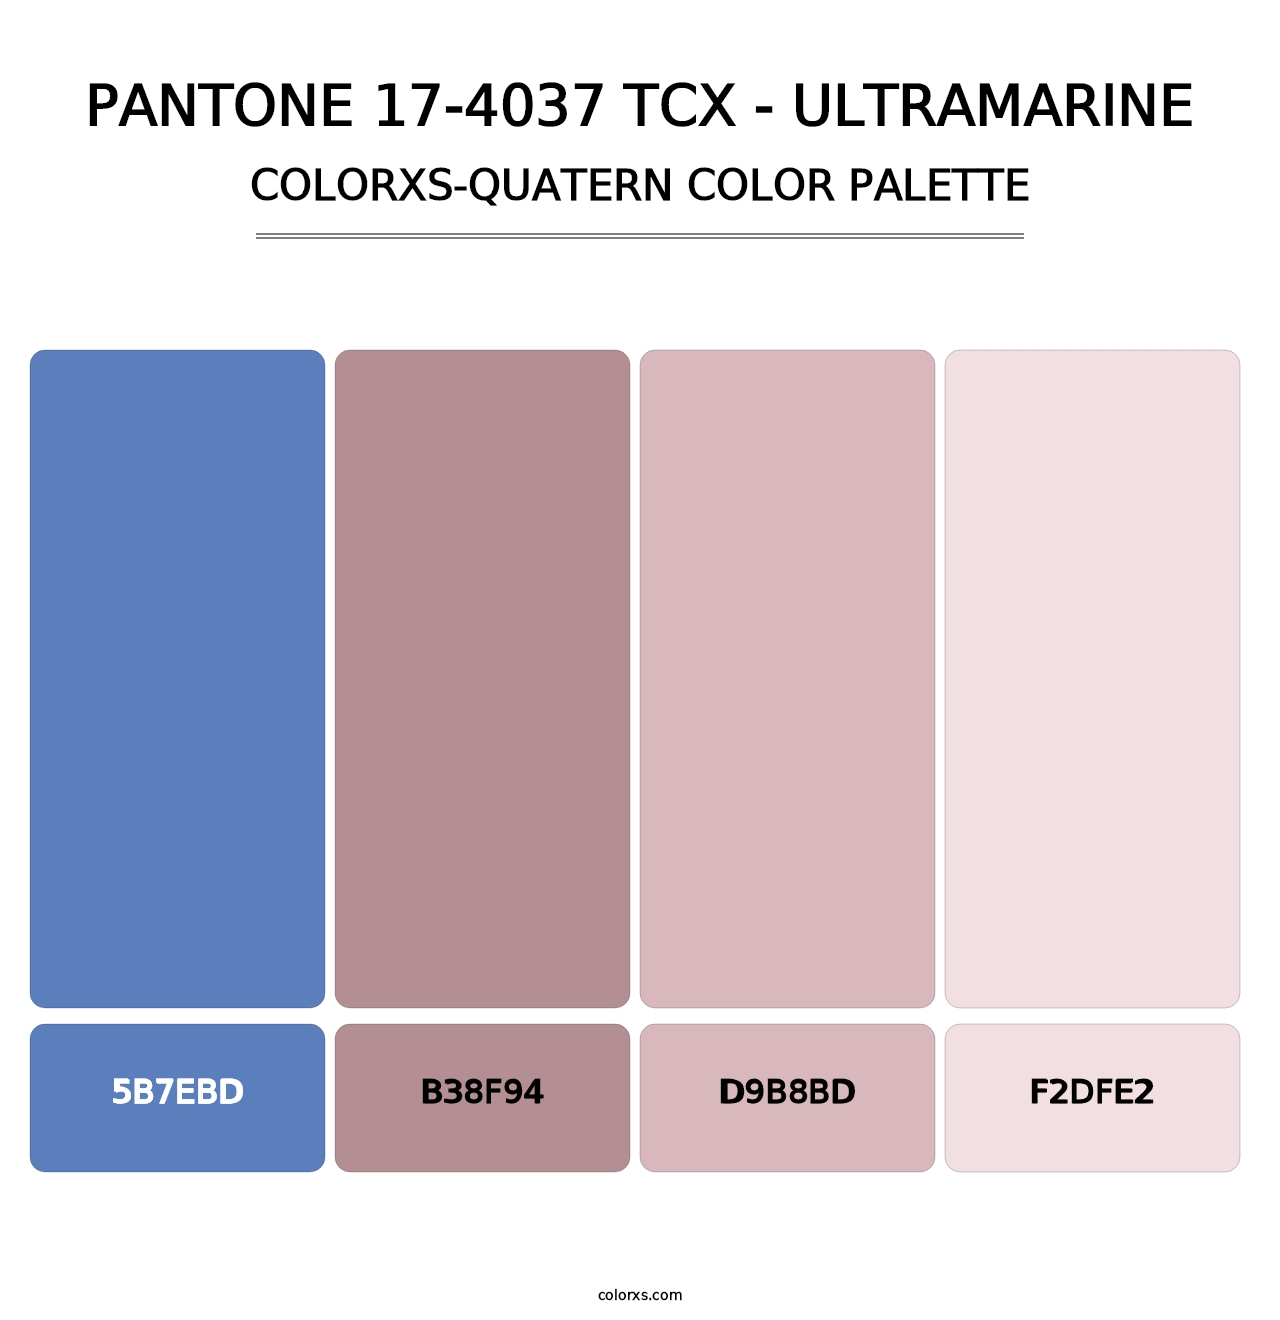 PANTONE 17-4037 TCX - Ultramarine - Colorxs Quatern Palette